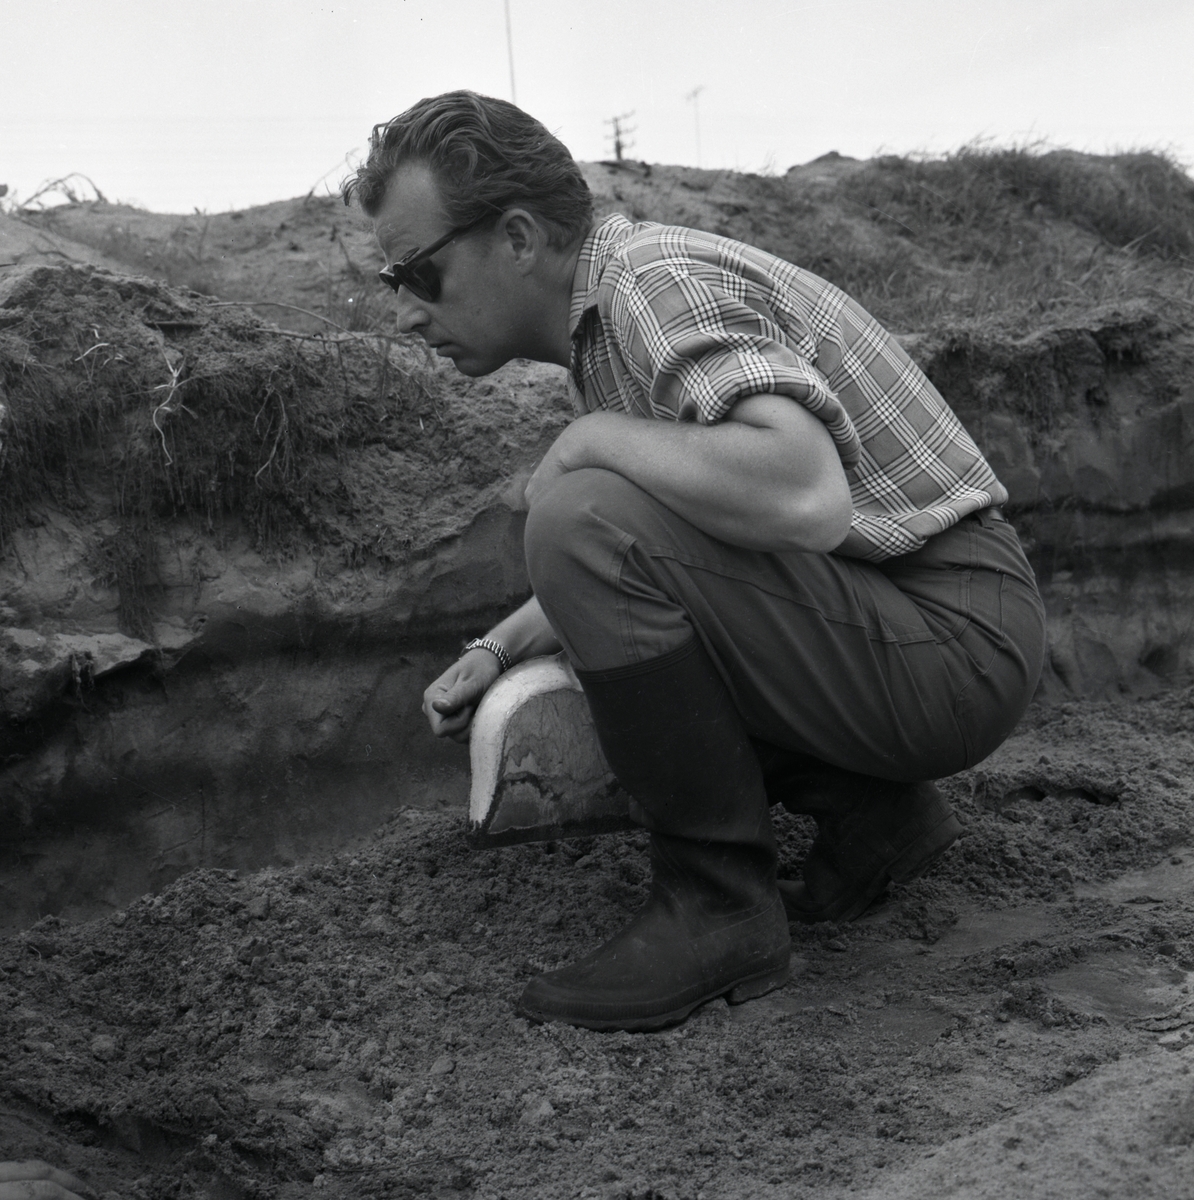 Utgrävning vid Skedemosse 1961.